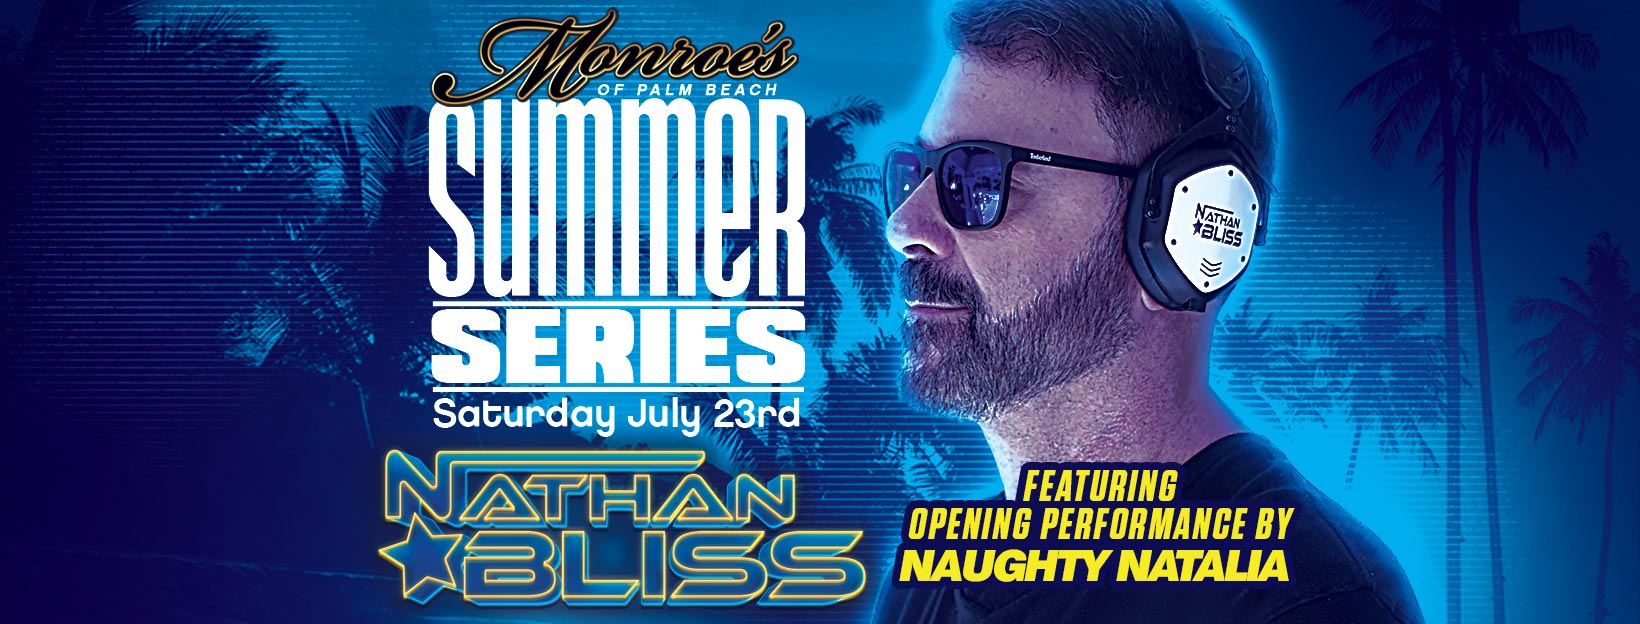 DJ Nathan Bliss Monroe's Summer Series Saturday July 23rd